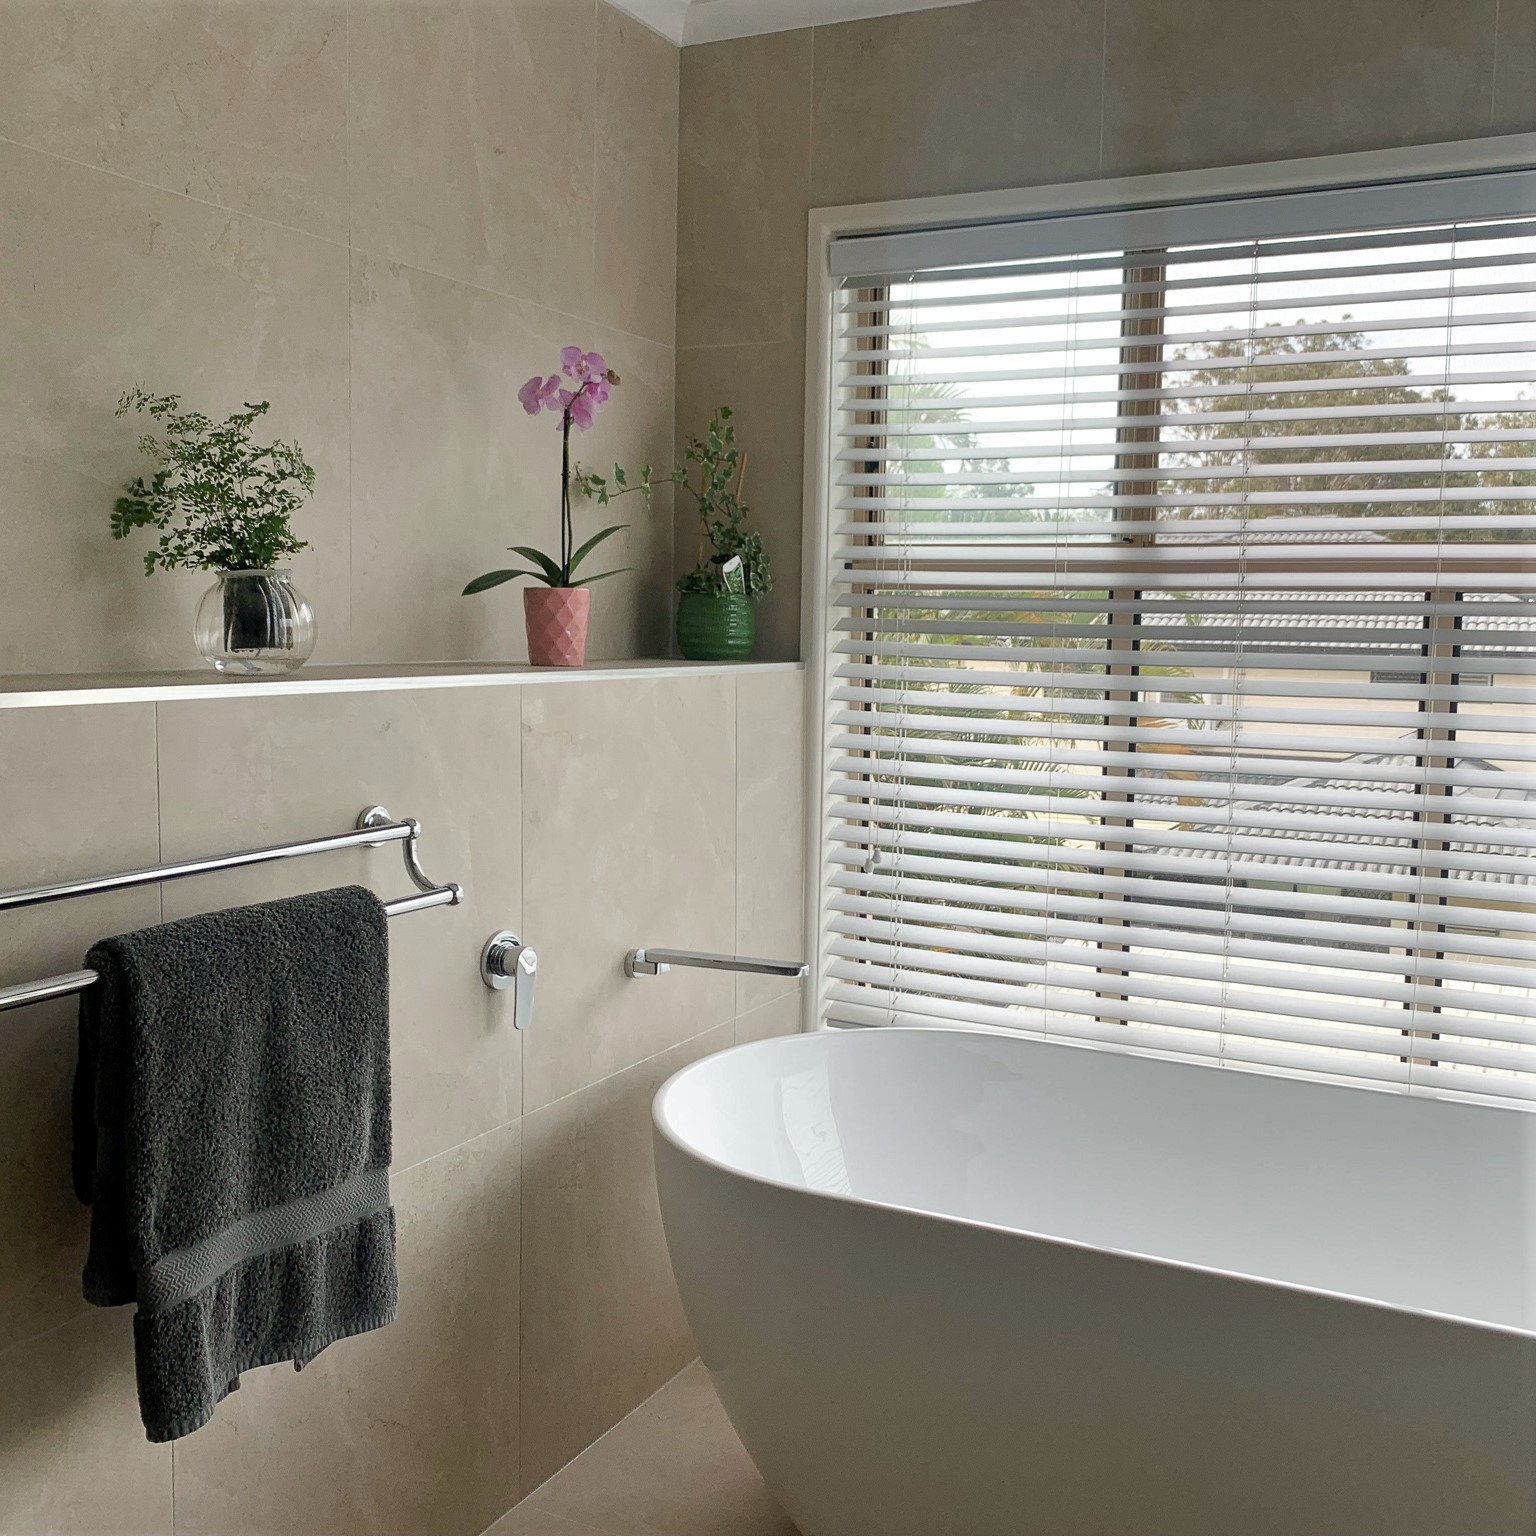 Beige neutral travertine tiles free standing tiles tiled ledge bathroom ensuite towel rails